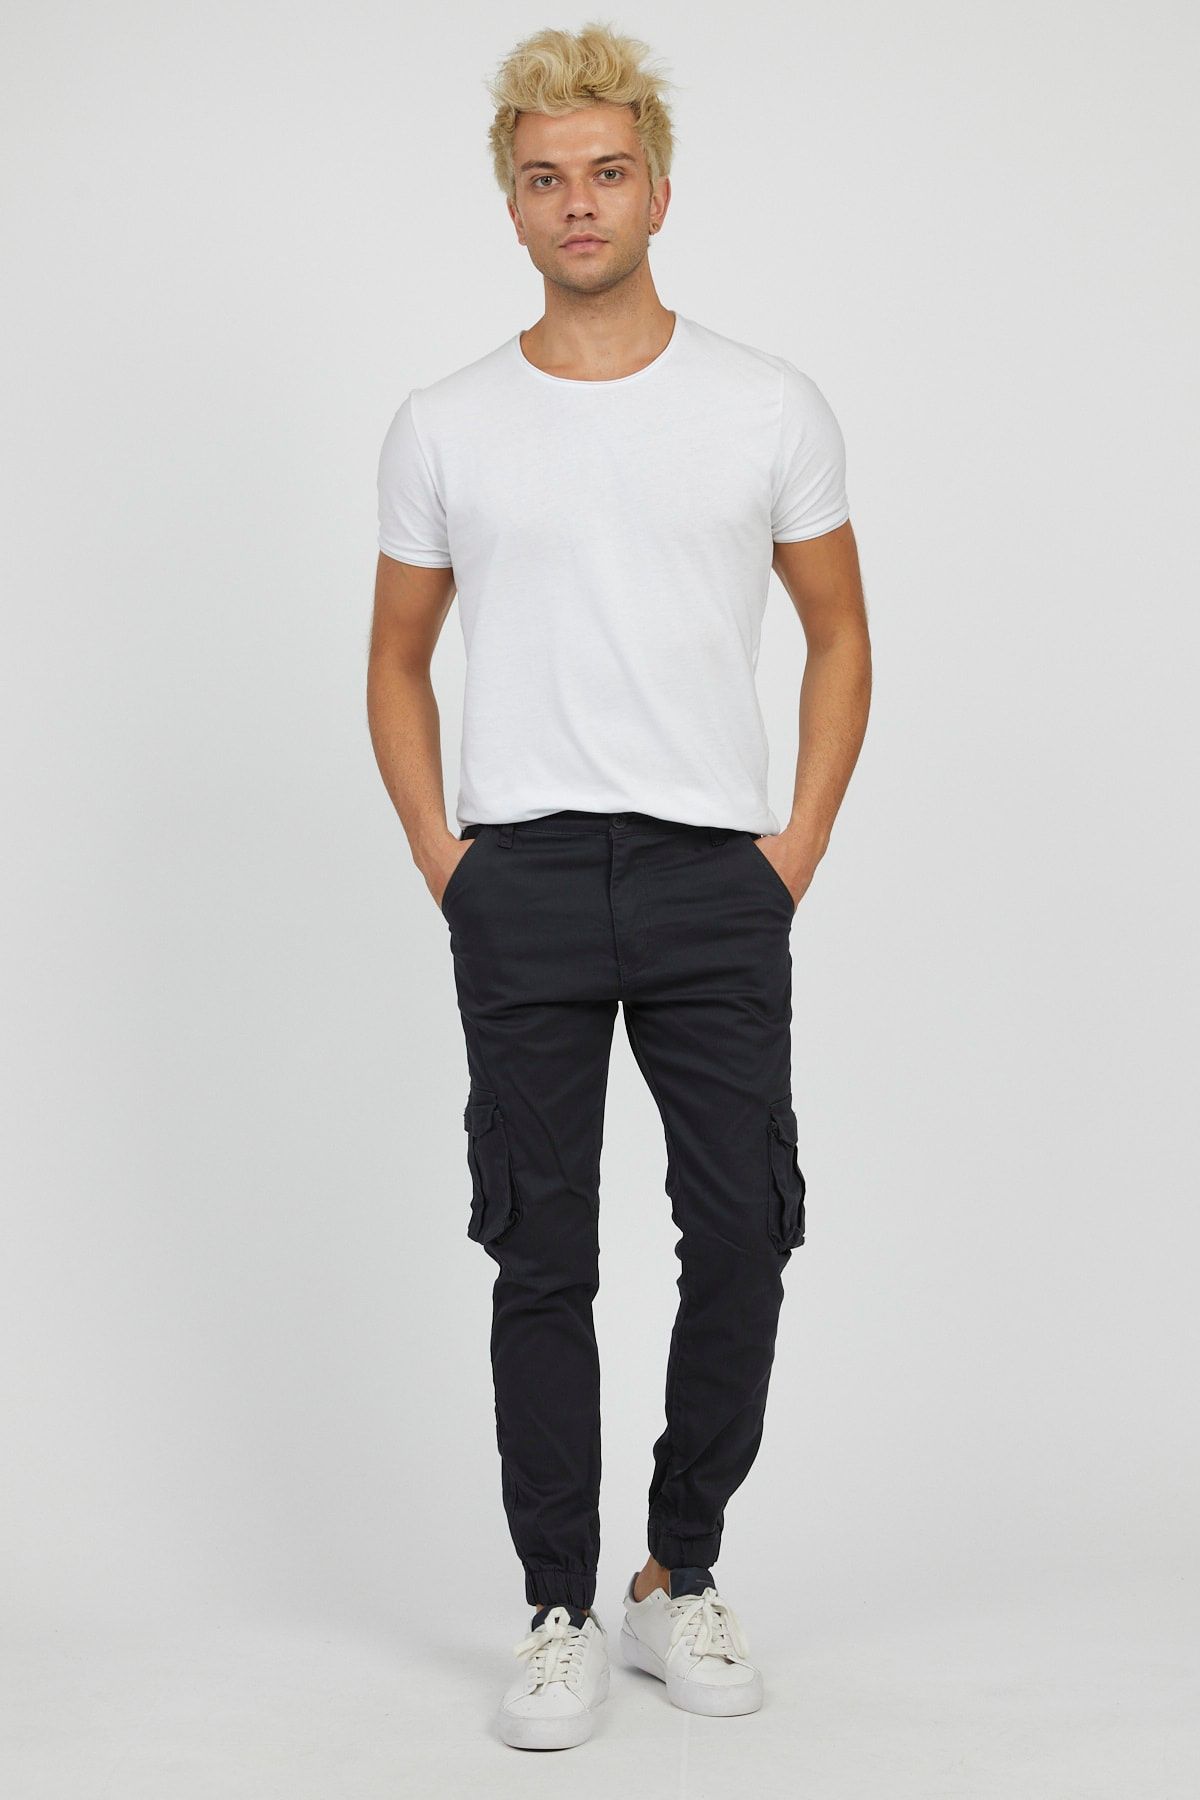 Serseri Jeans Erkek Körüklü Füme Antrasit Renk Jogger Paçası Lastikli Pantolon